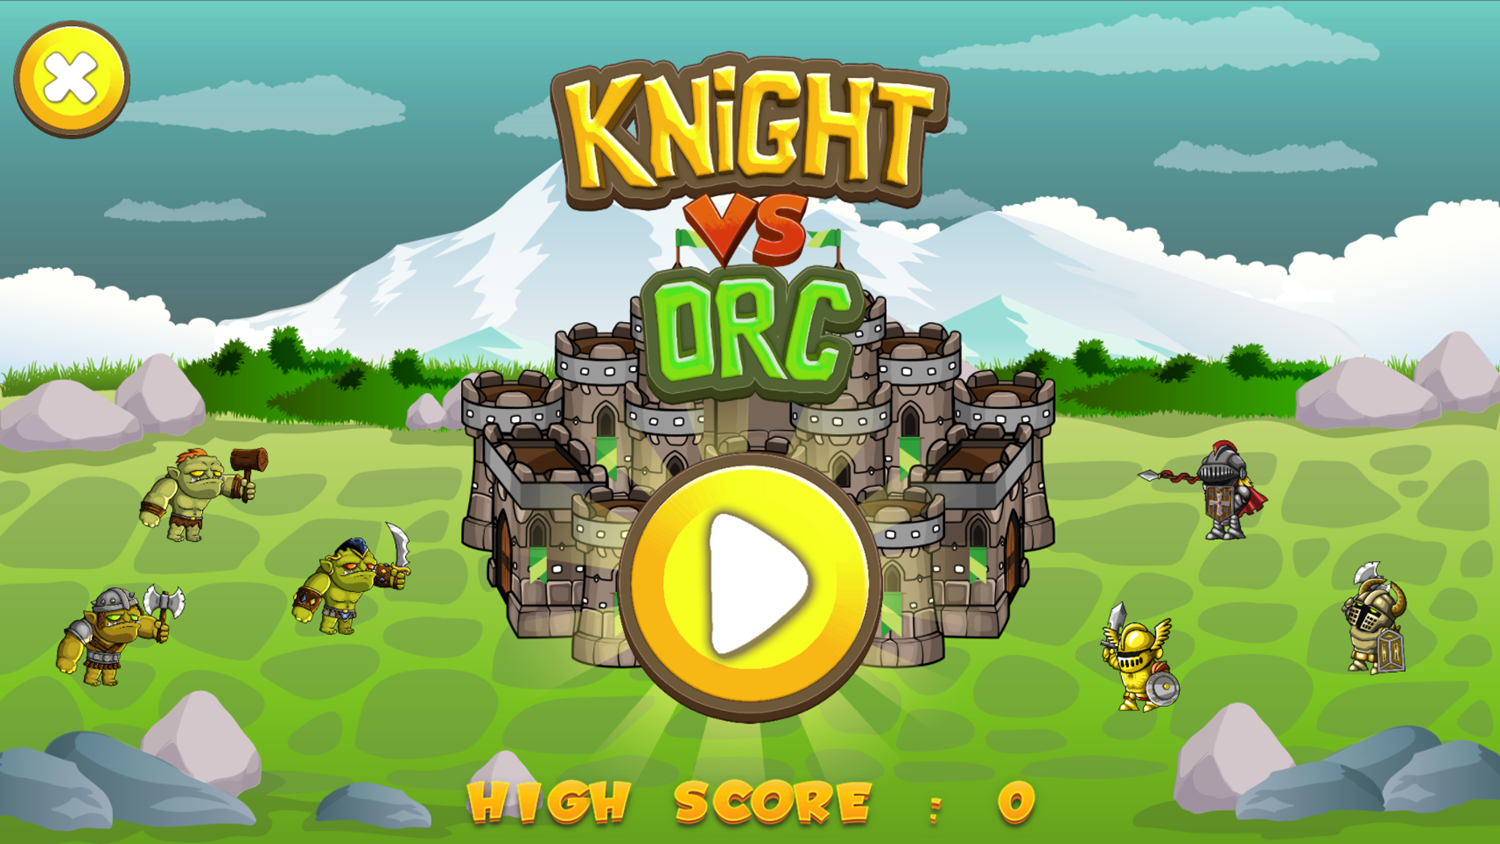 Knight vs Orc Game Welcome Screen Screenshot.